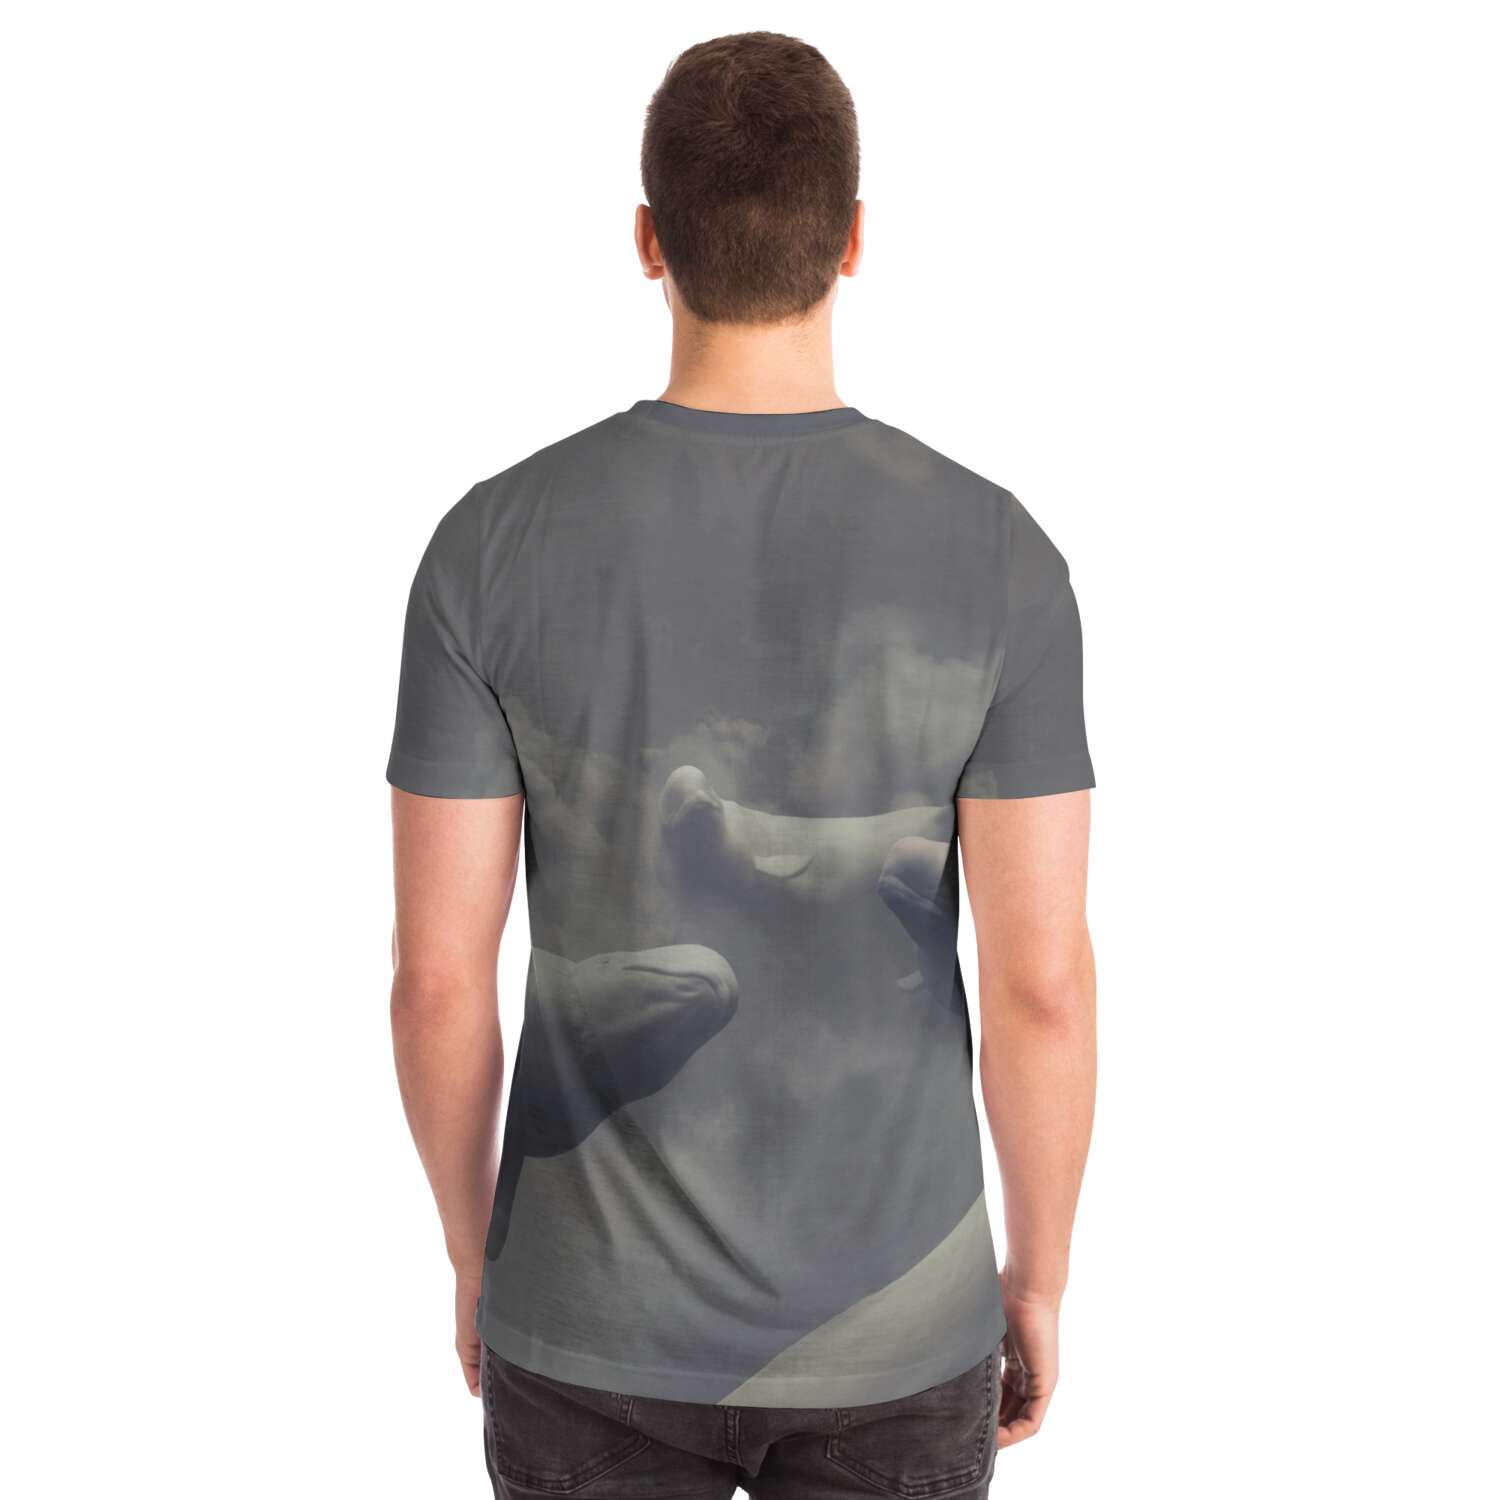 AOP T-Shirt Beluga Dreams Whale Orca Deep Sea Ocean Fantasy Clouds Graphic Tee T-Shirt